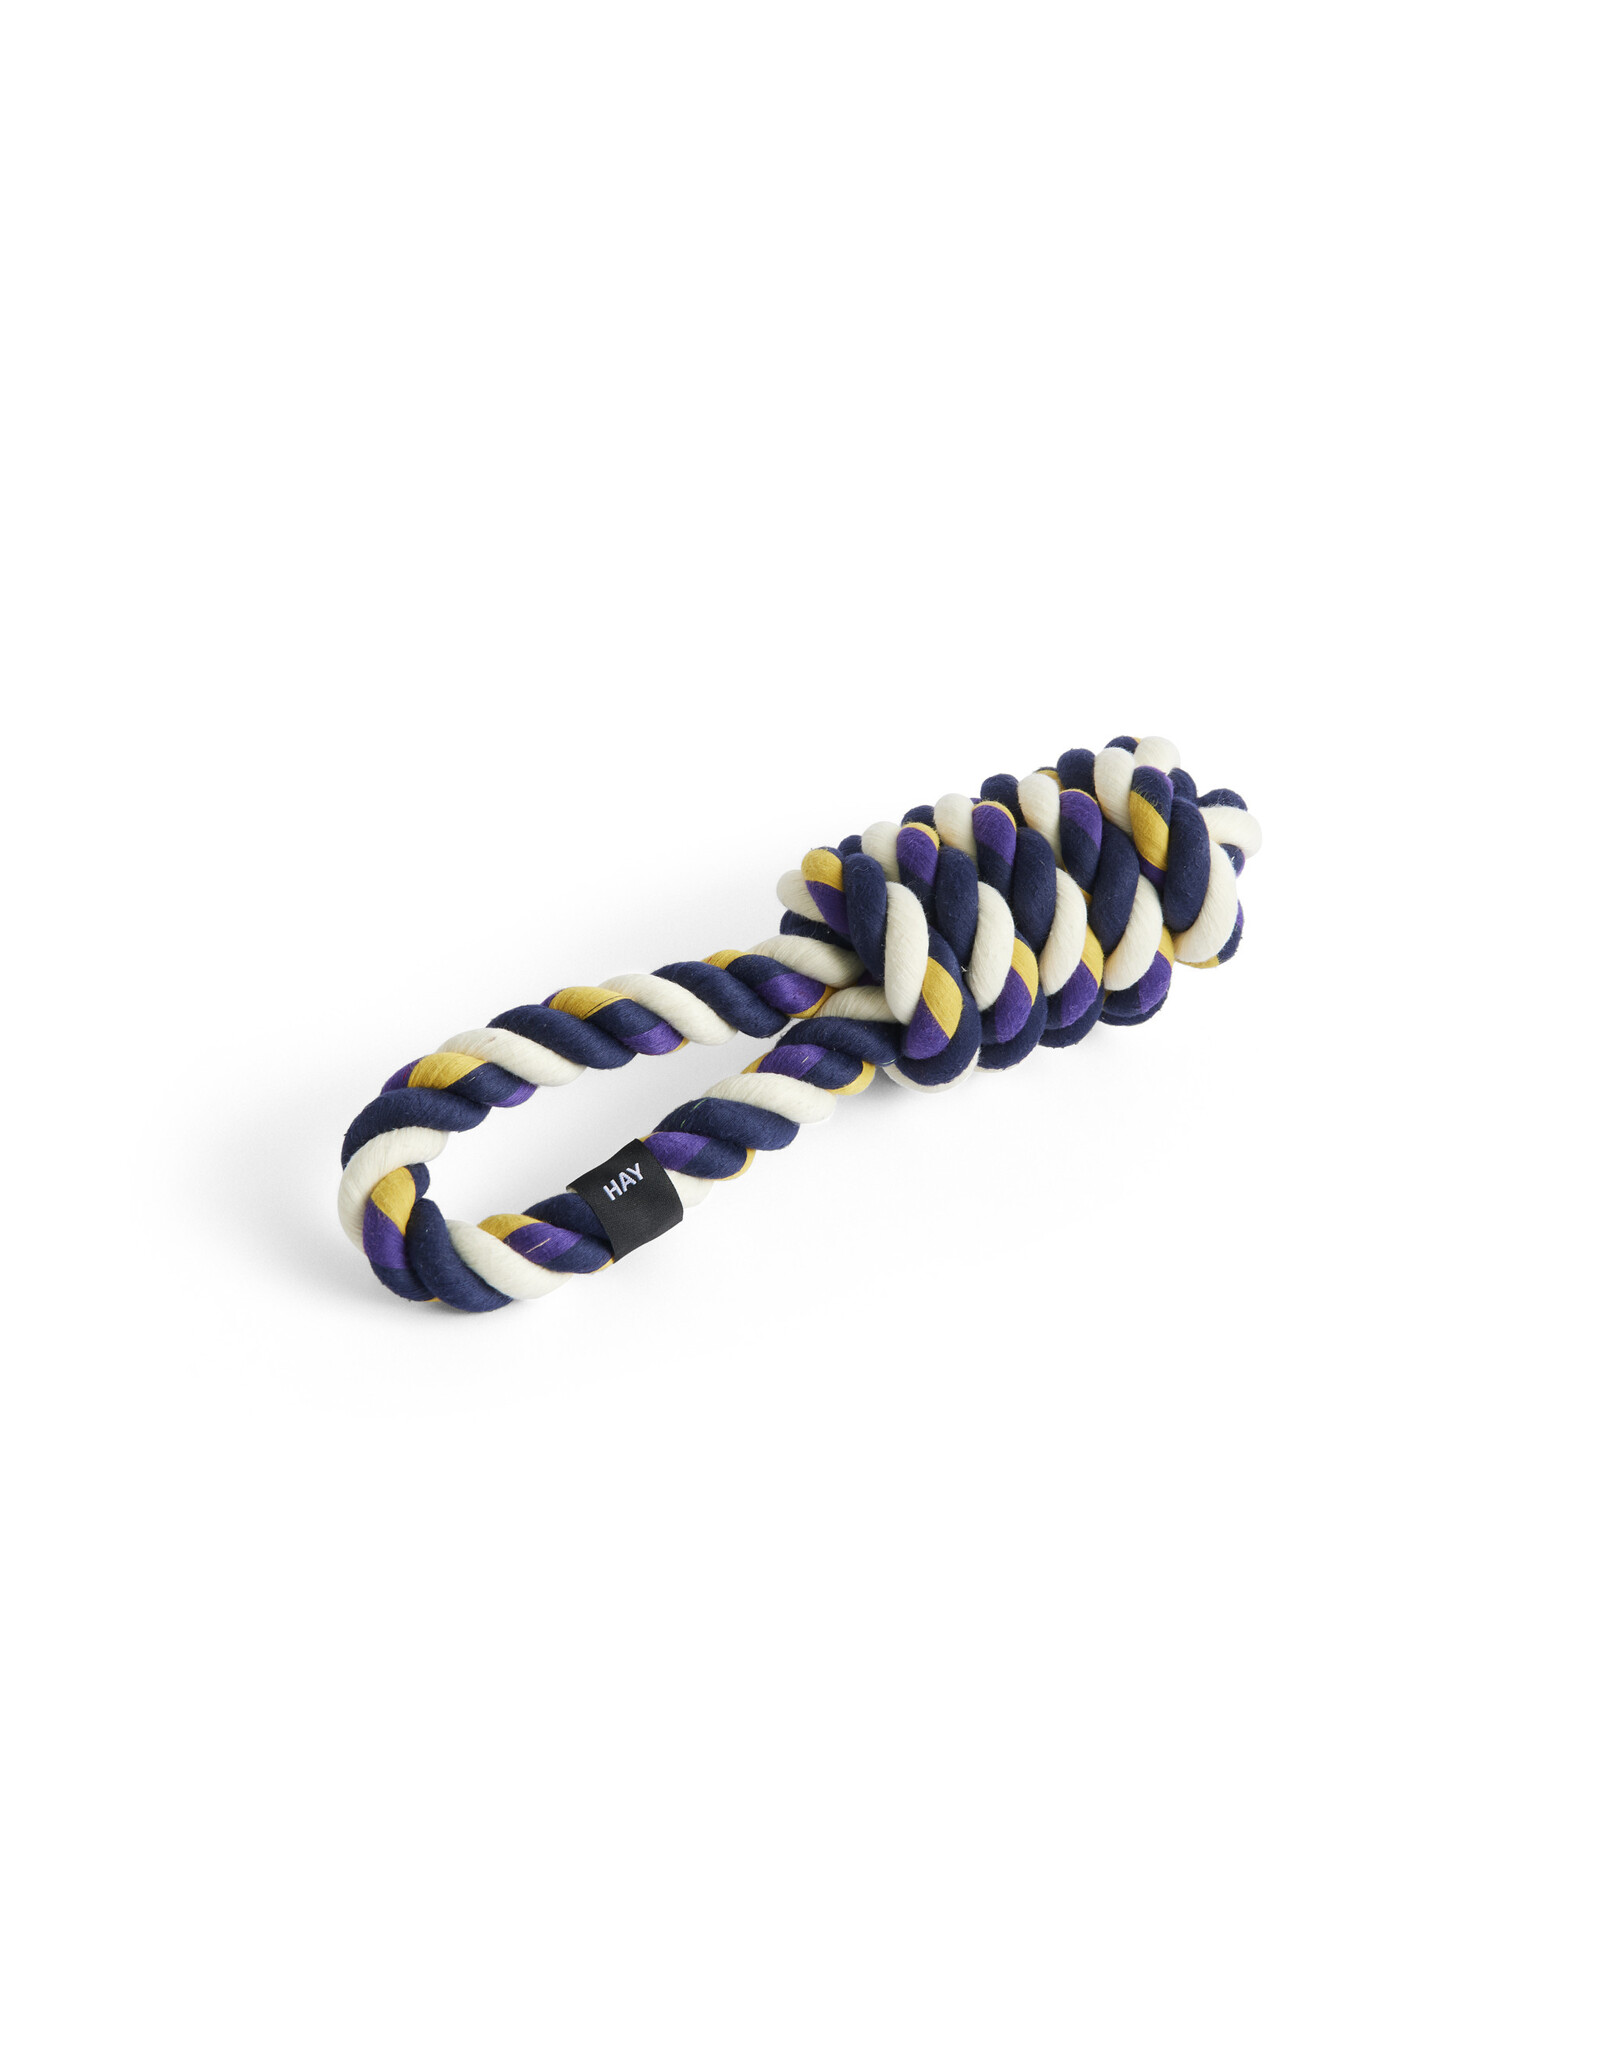 HAY Dogs Rope Toy-Blue, purple, ochre